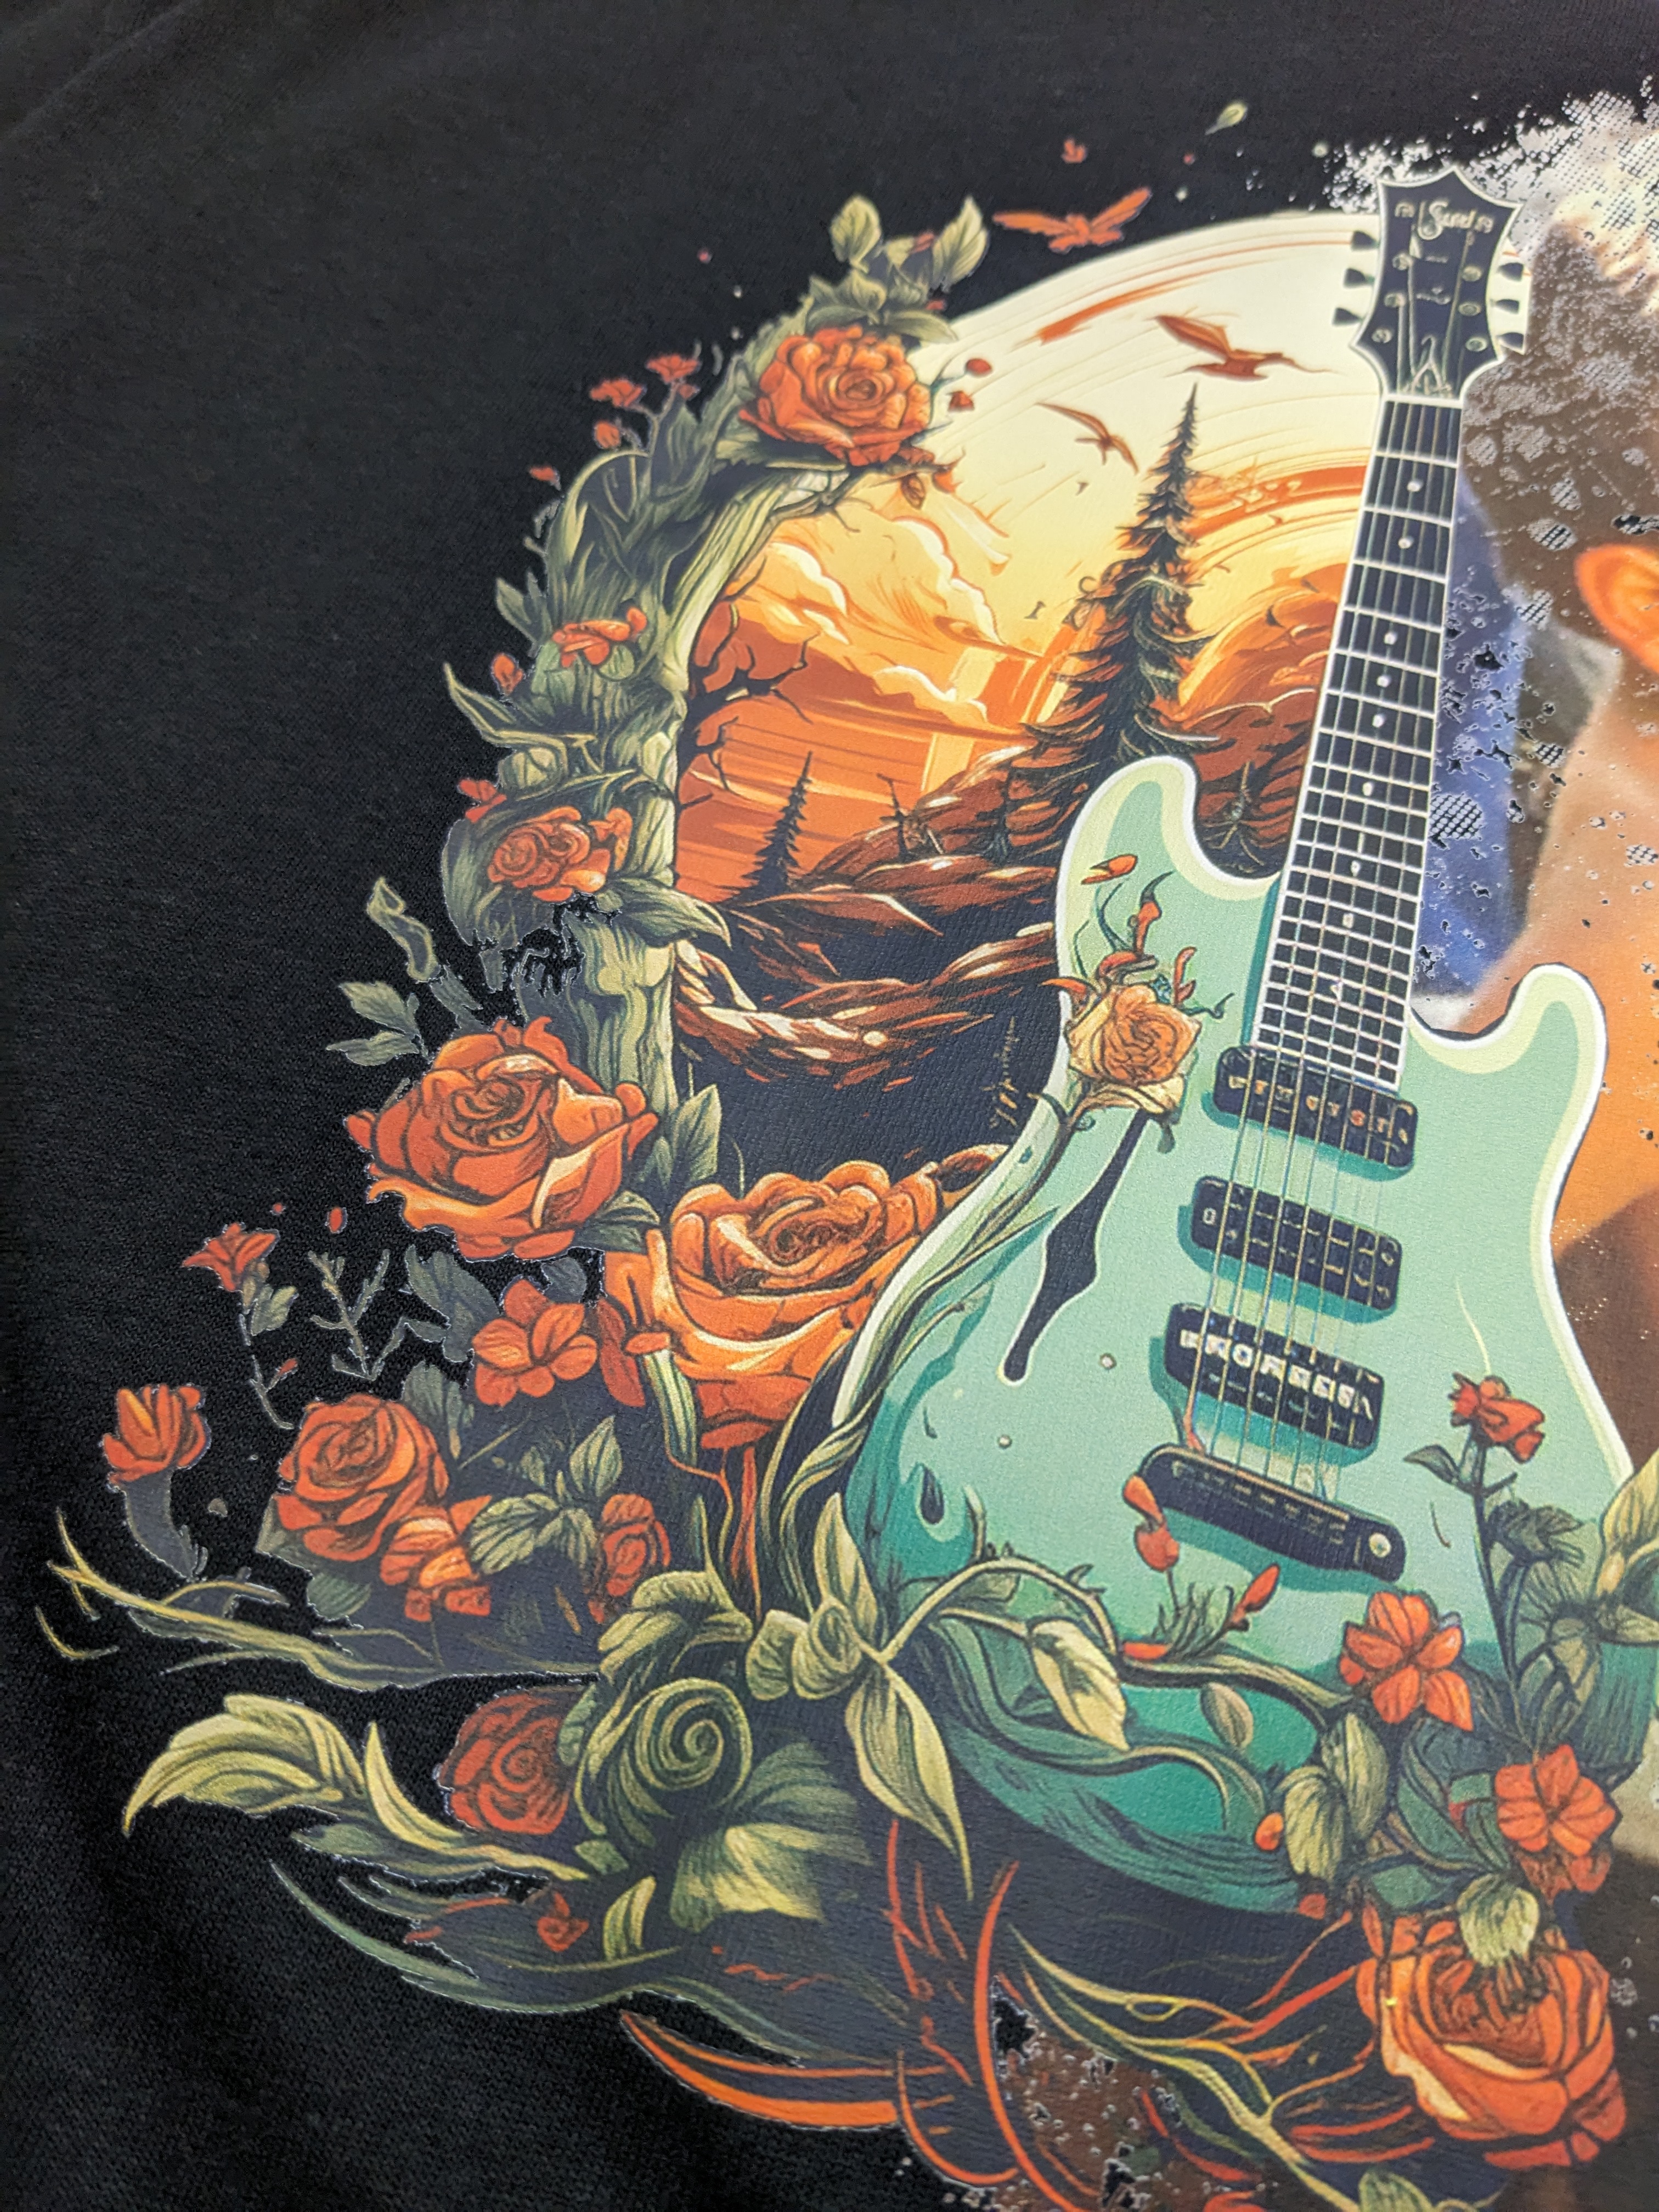 Guitar T-Shirt Design